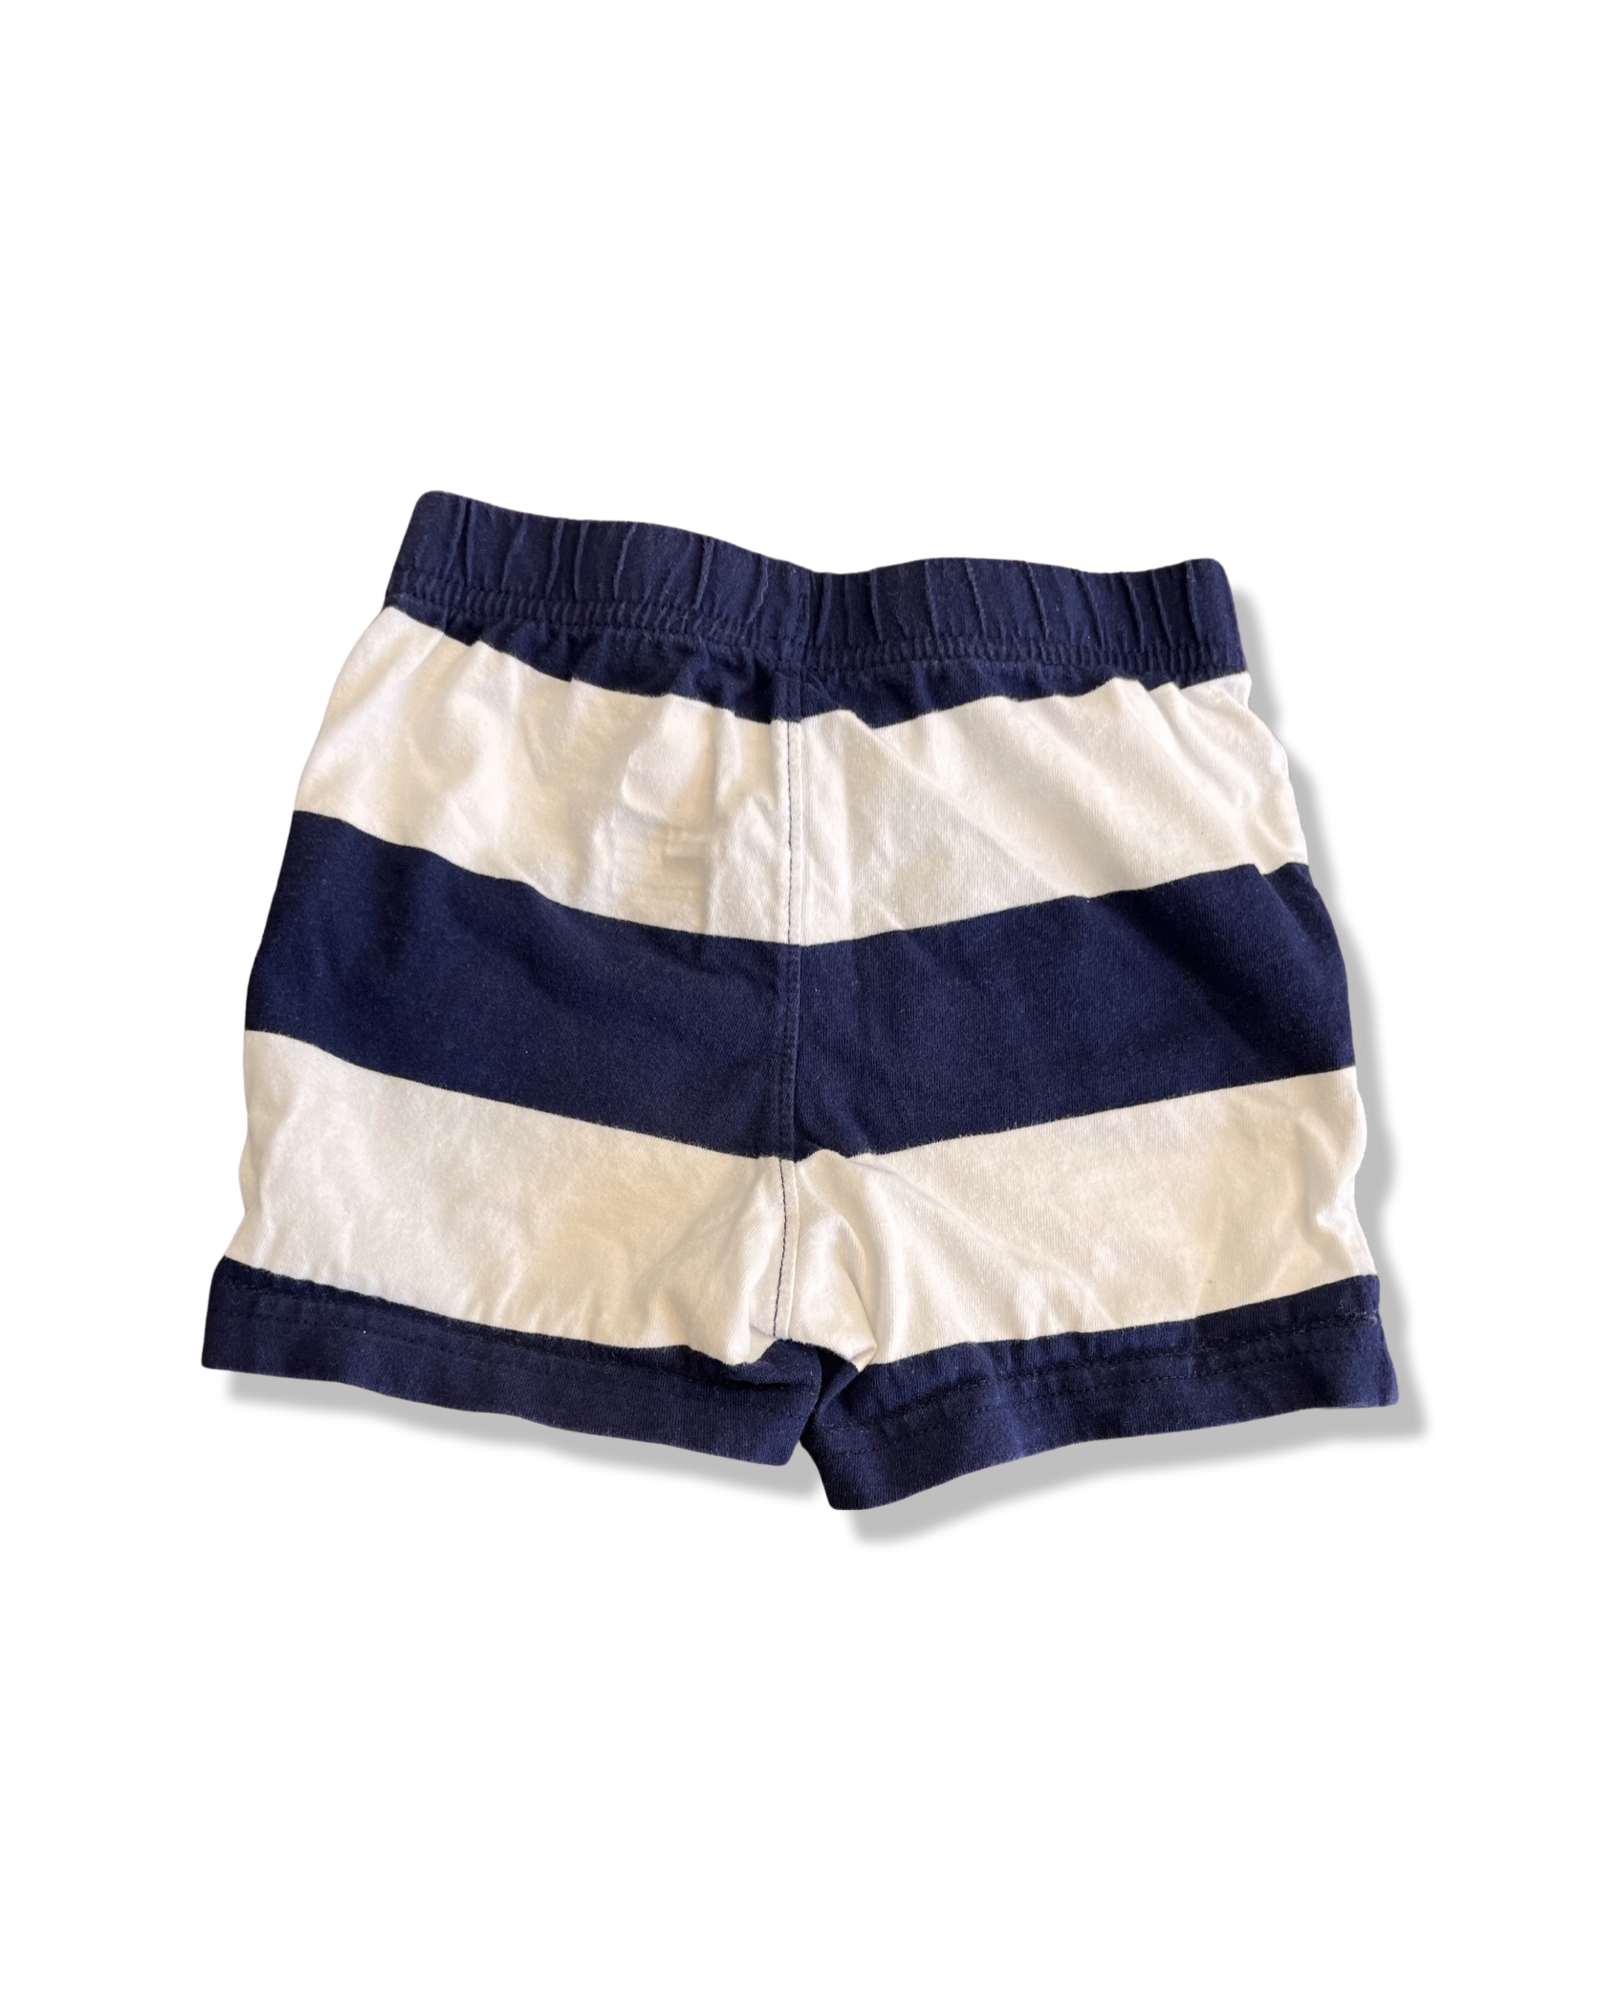 Baby Gap Blue and Navy Shorts (12-18M)